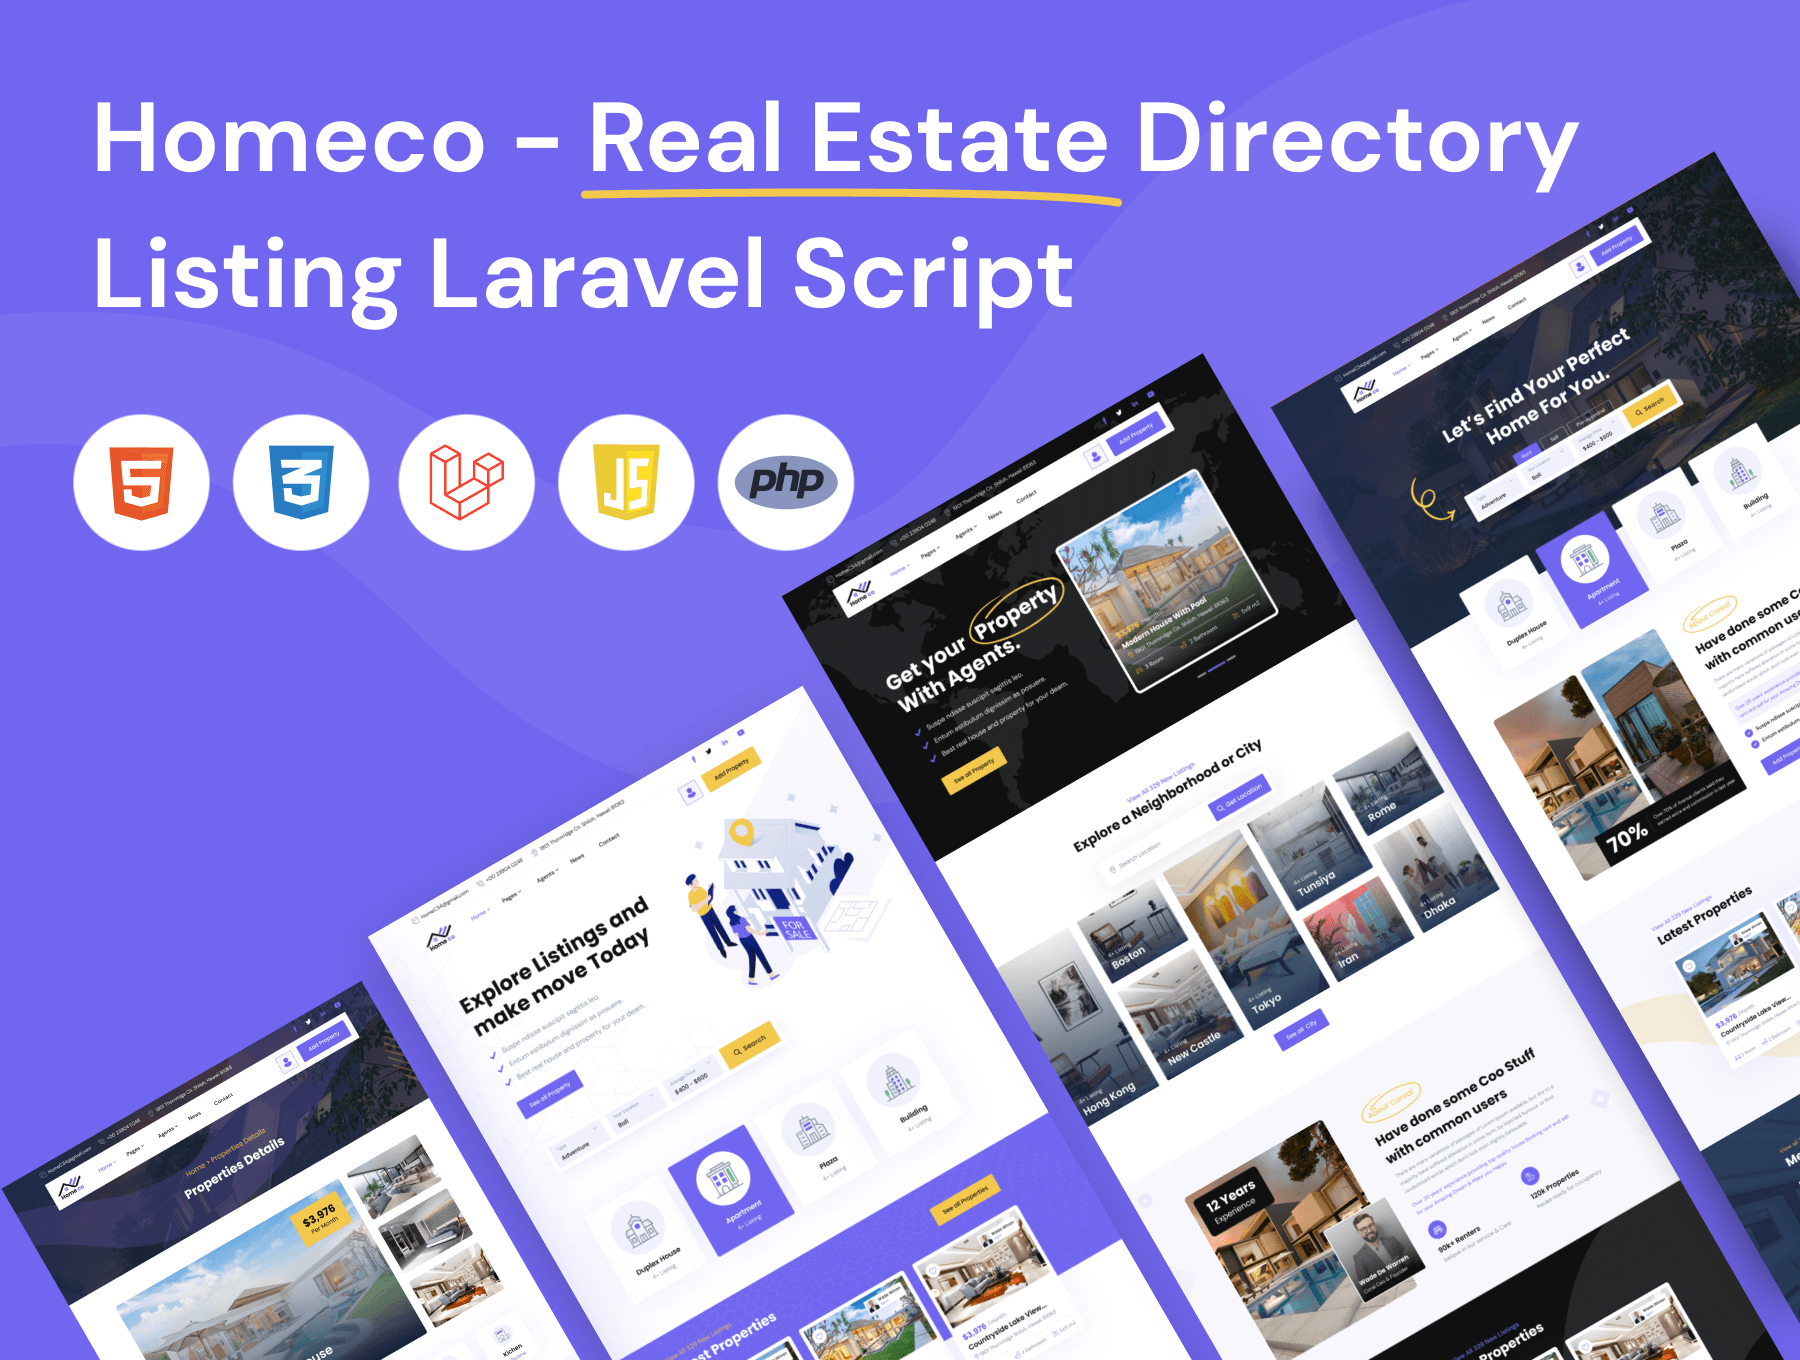 Homeco - Real Estate Directory Listing Laravel Script